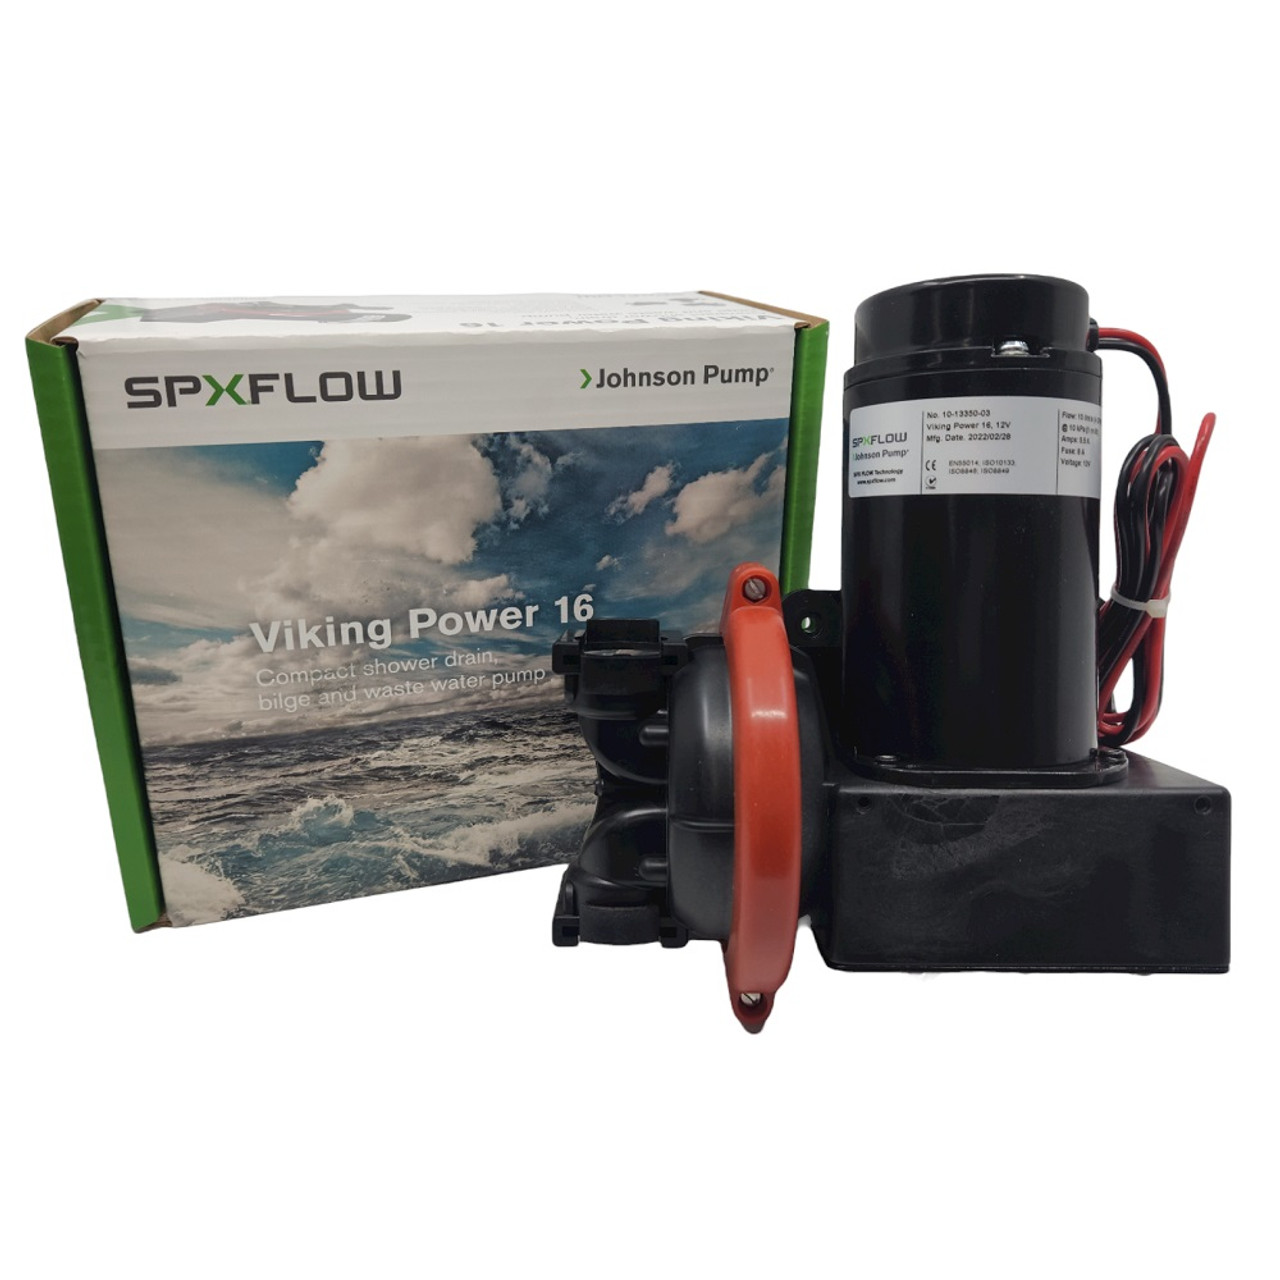 SPX Johnson 10-13350-04 Viking Power 16 Diaphragm Pump 24 Volt